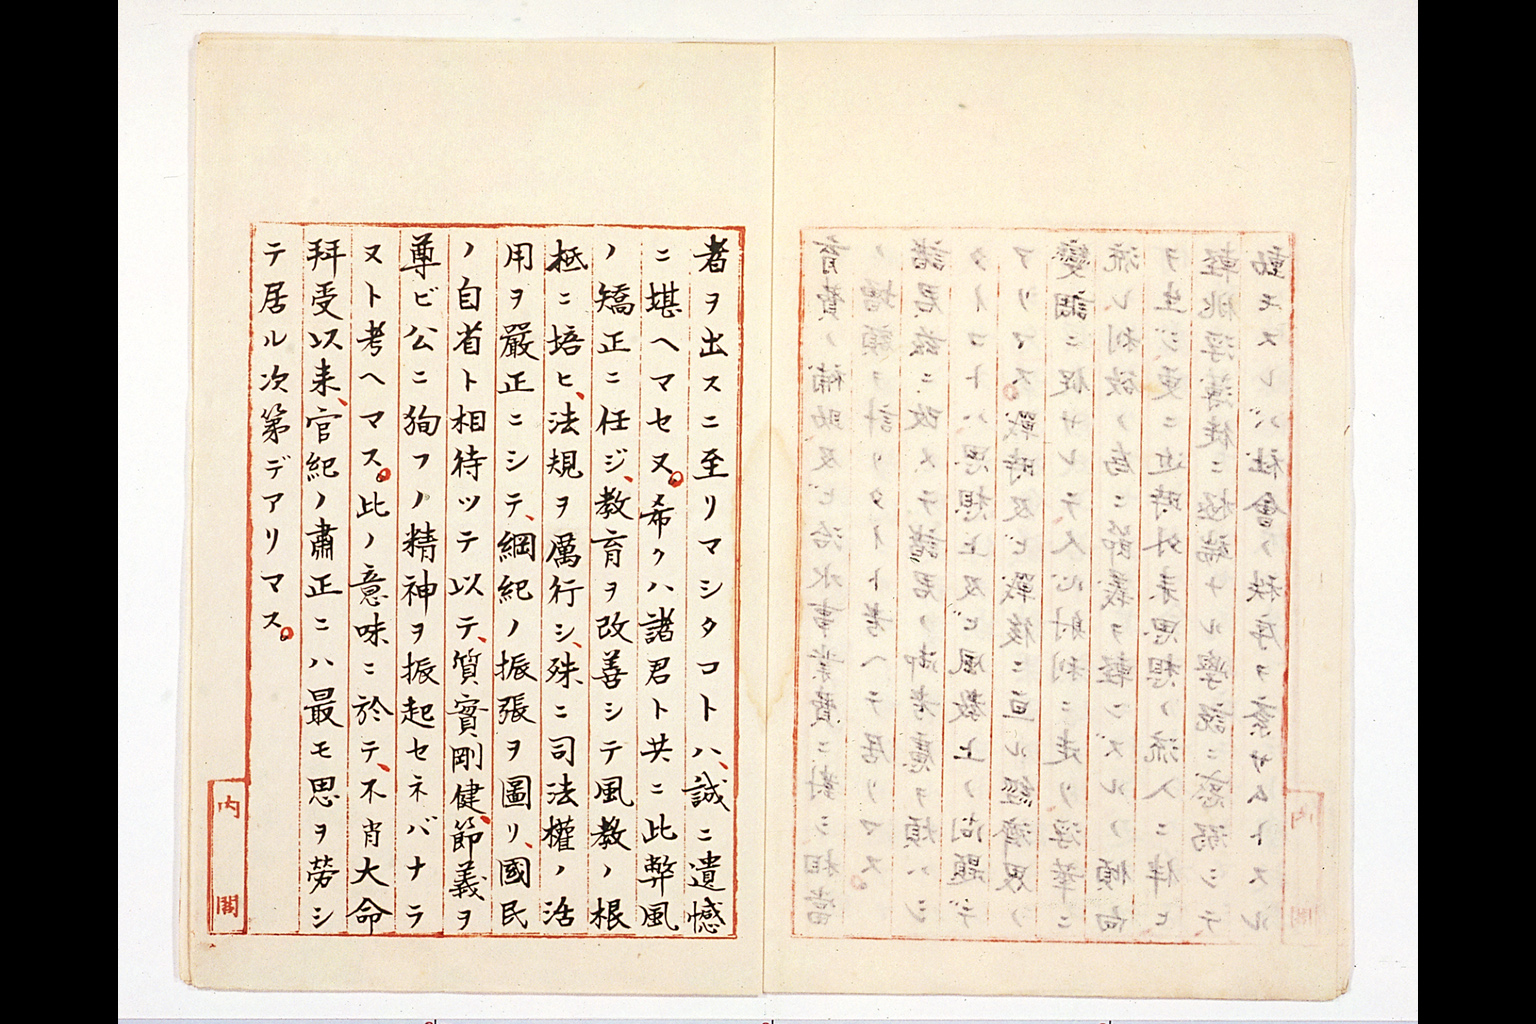 Manuscript of Prime Minister's Inaugural Speech(larger)